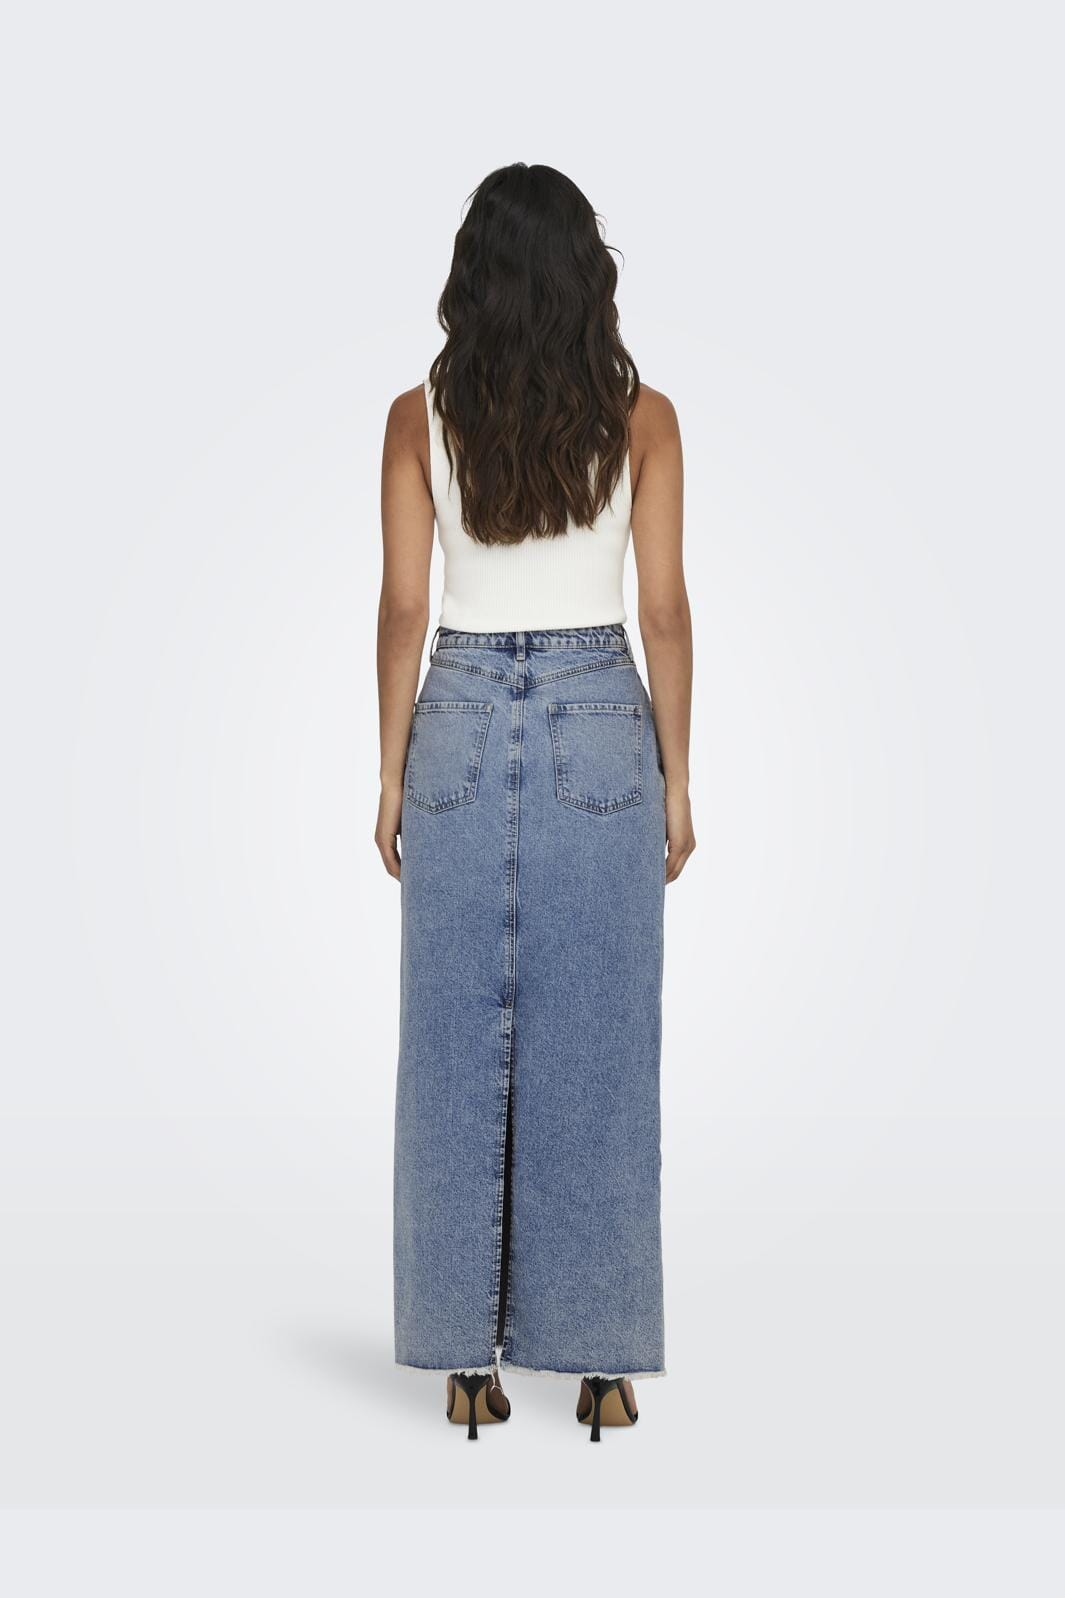 Only - Onlada Cut Long Skirt - 4380064 Medium Blue Denim